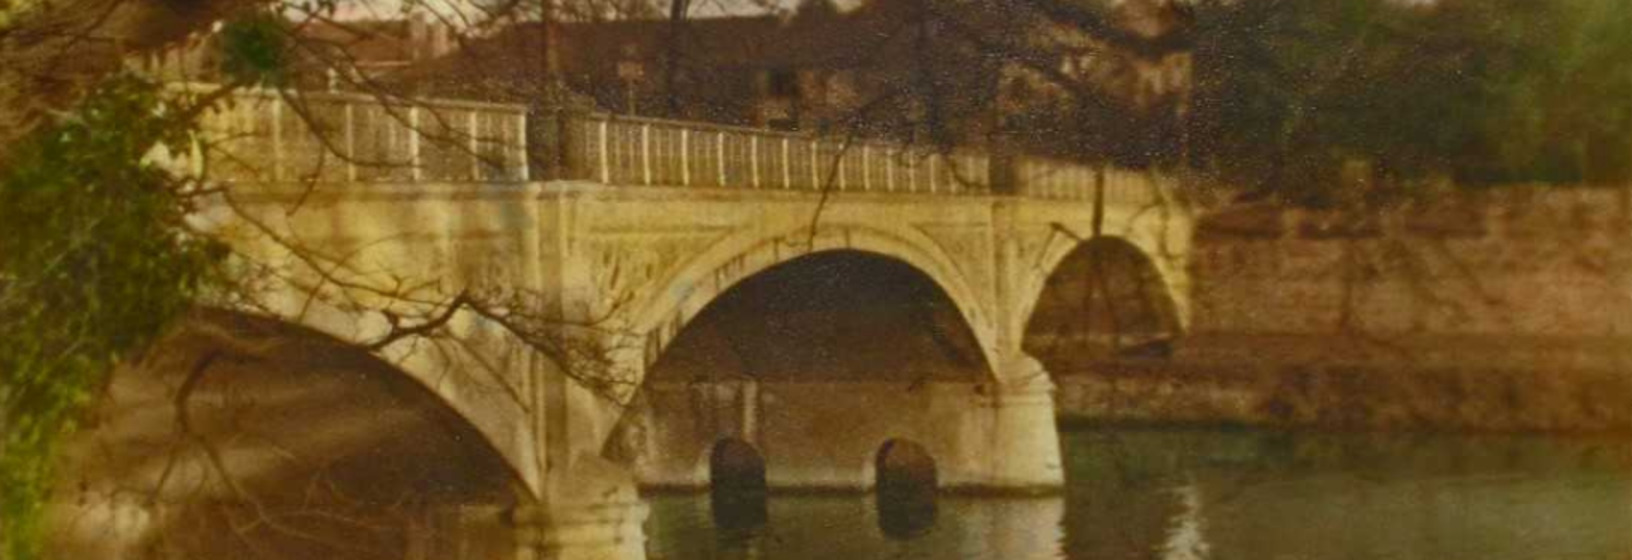 view of a bridge over a river